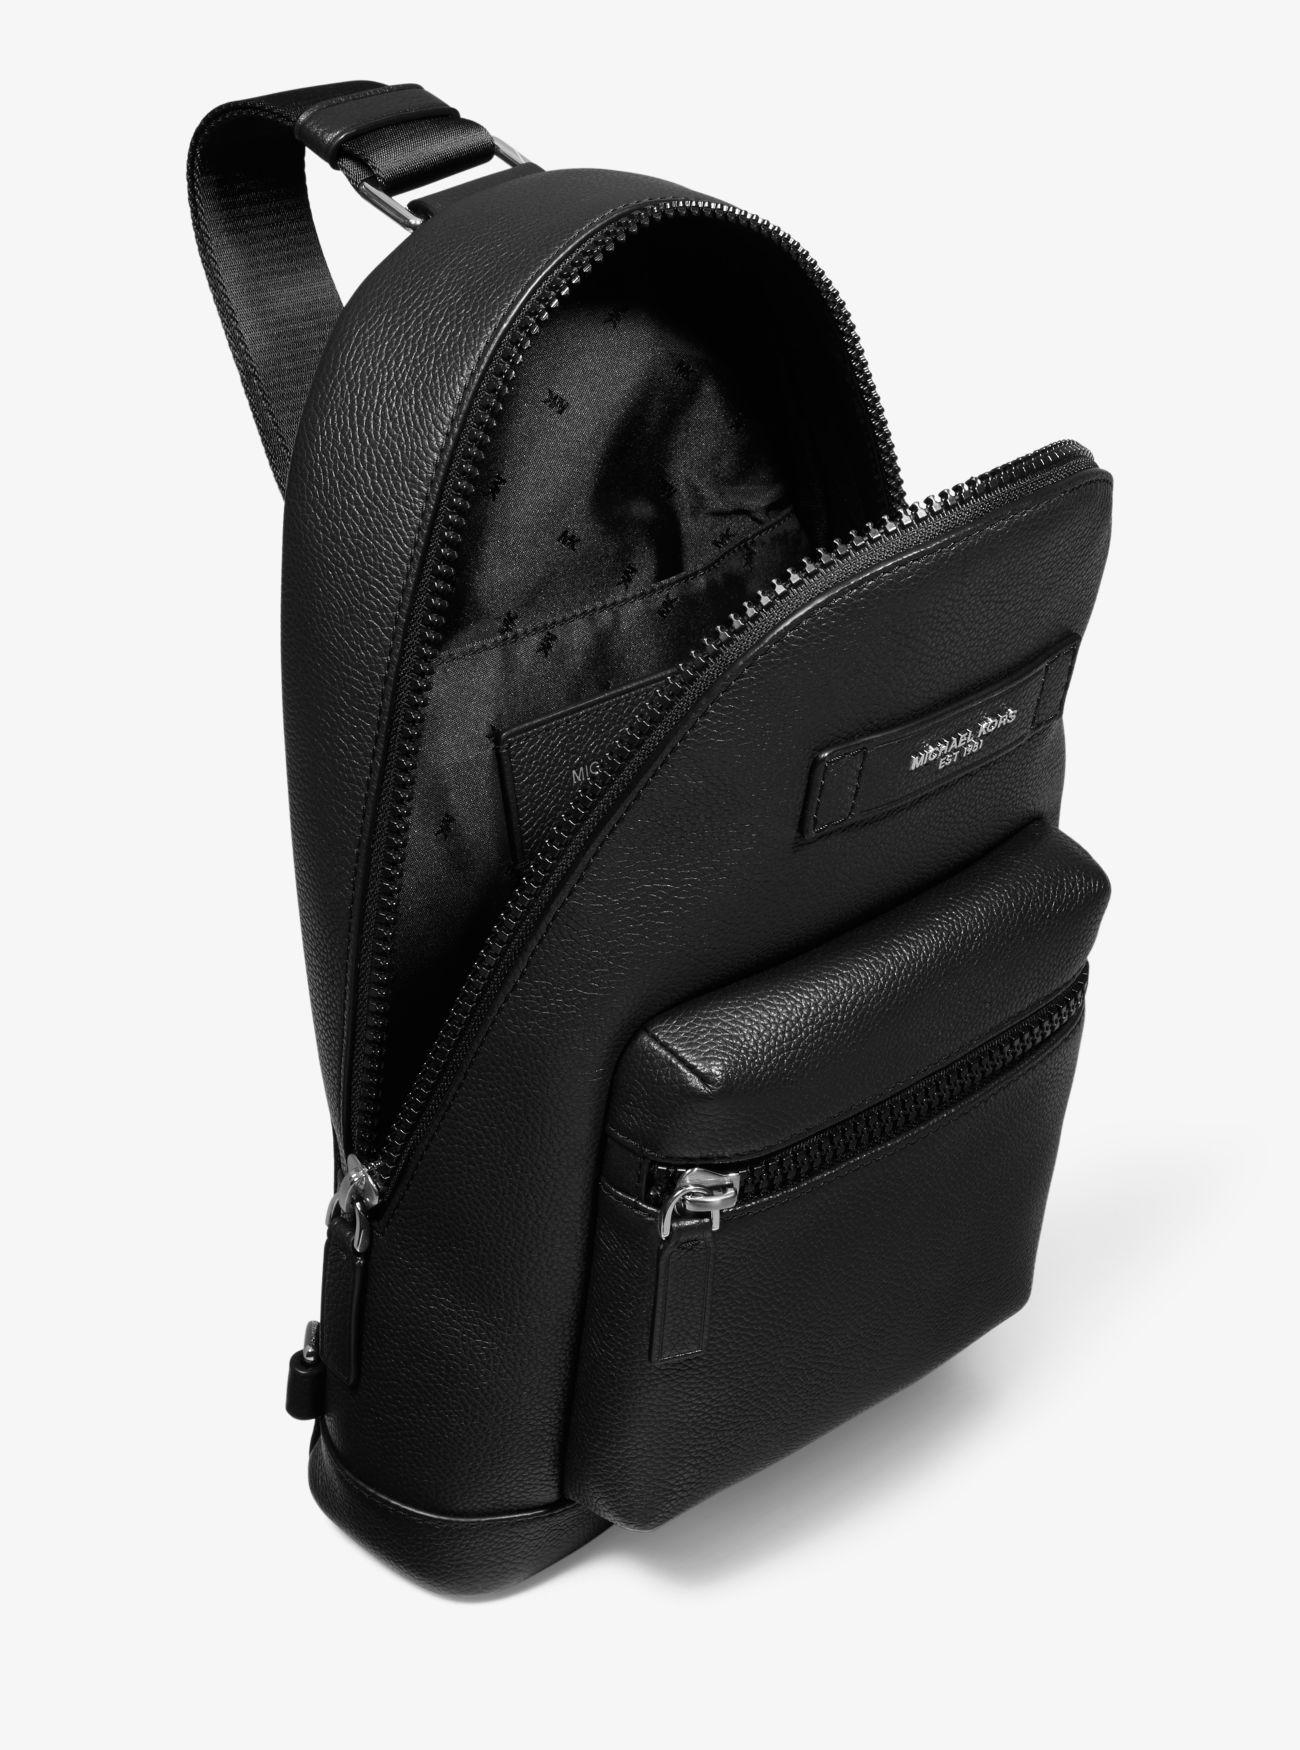 Michael Kors Cooper Pebbled Leather Sling Pack in Black for Men - Lyst